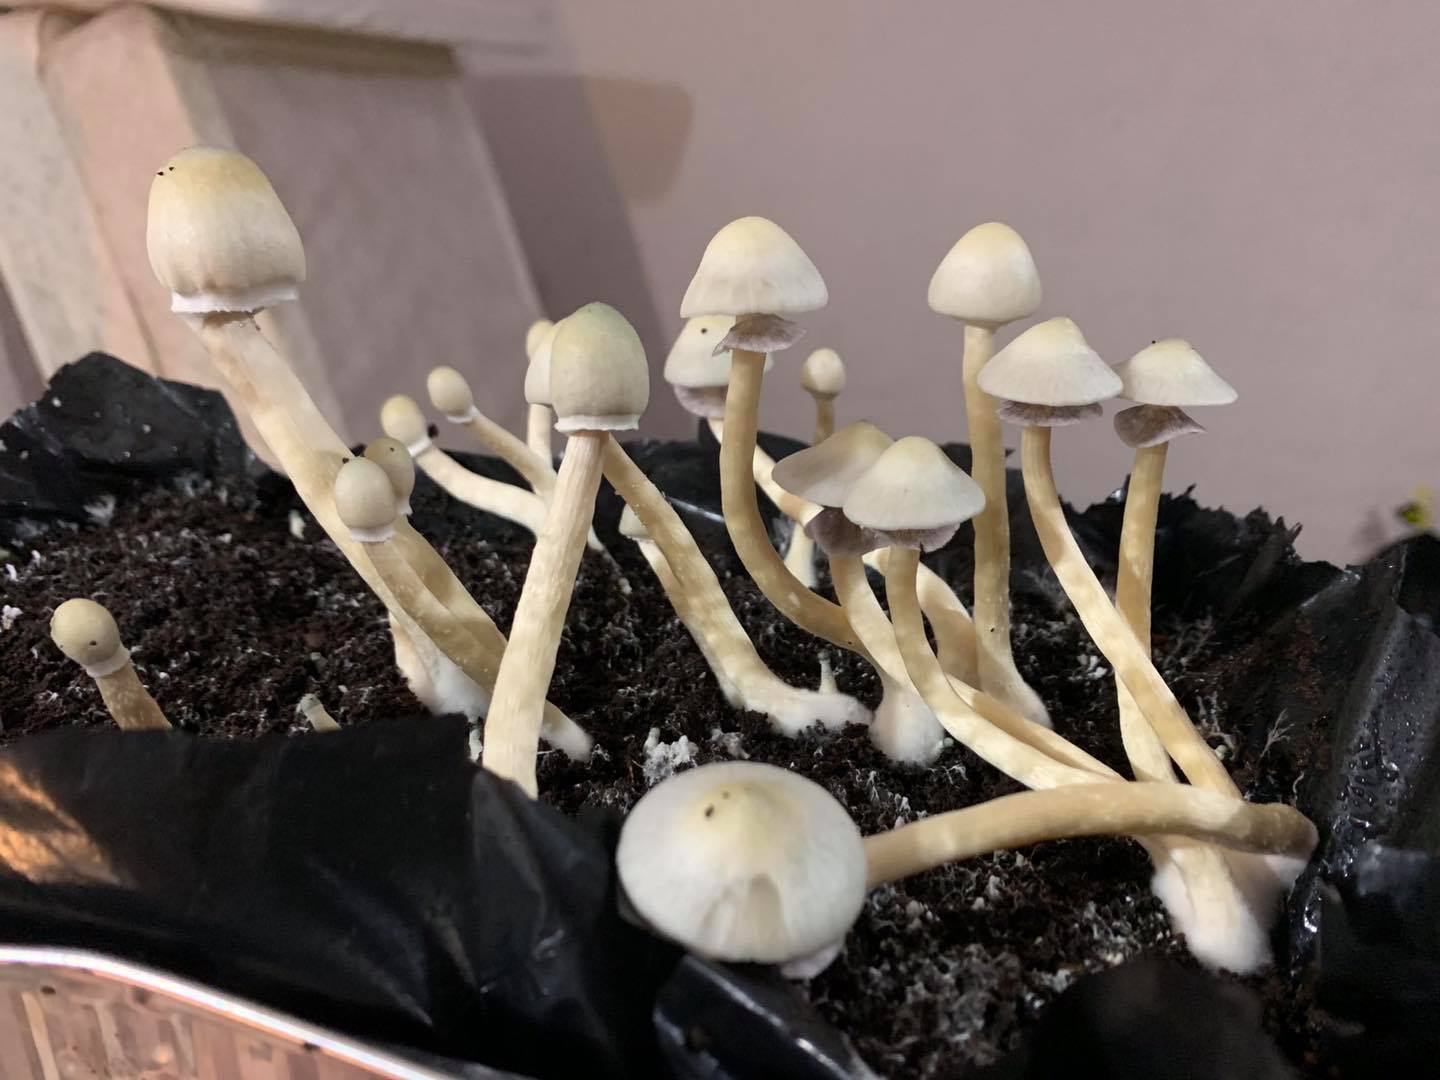 Buy Albino A+ Magic Mushrooms|where to buy mushrooms| Cheap shroom